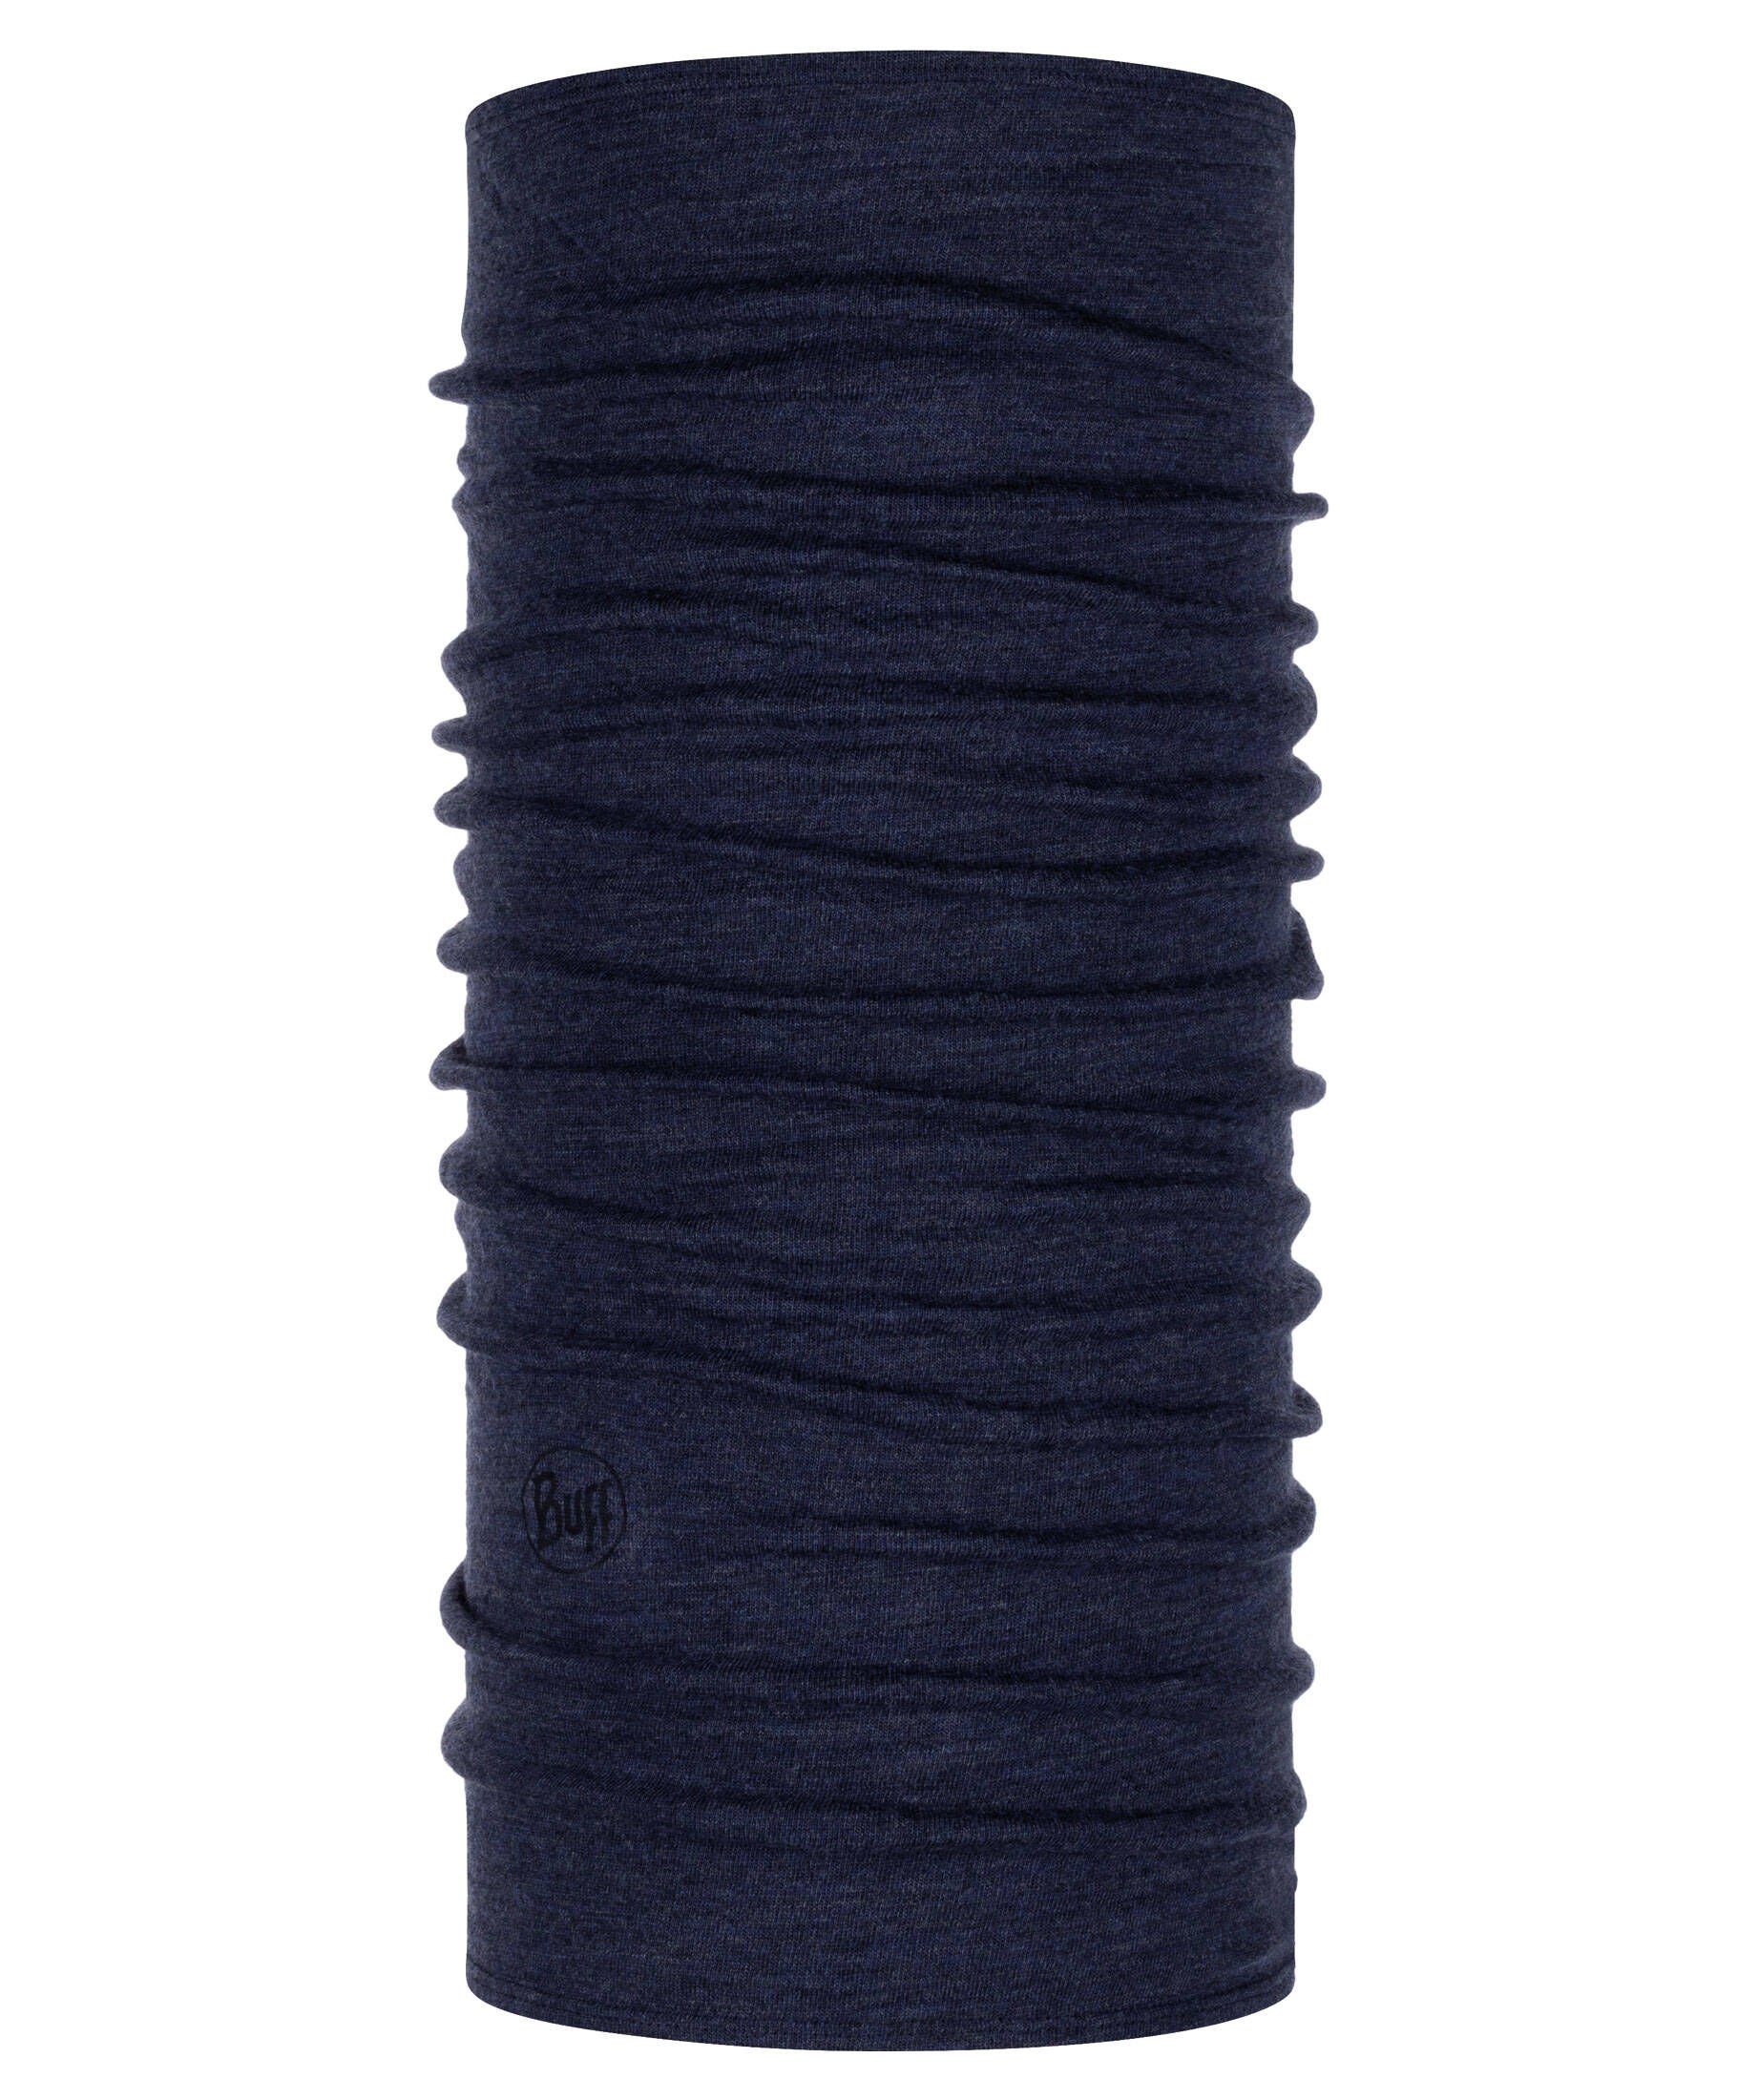 Buff Loop Multifunktionstuch "Midweight Merino Wool"